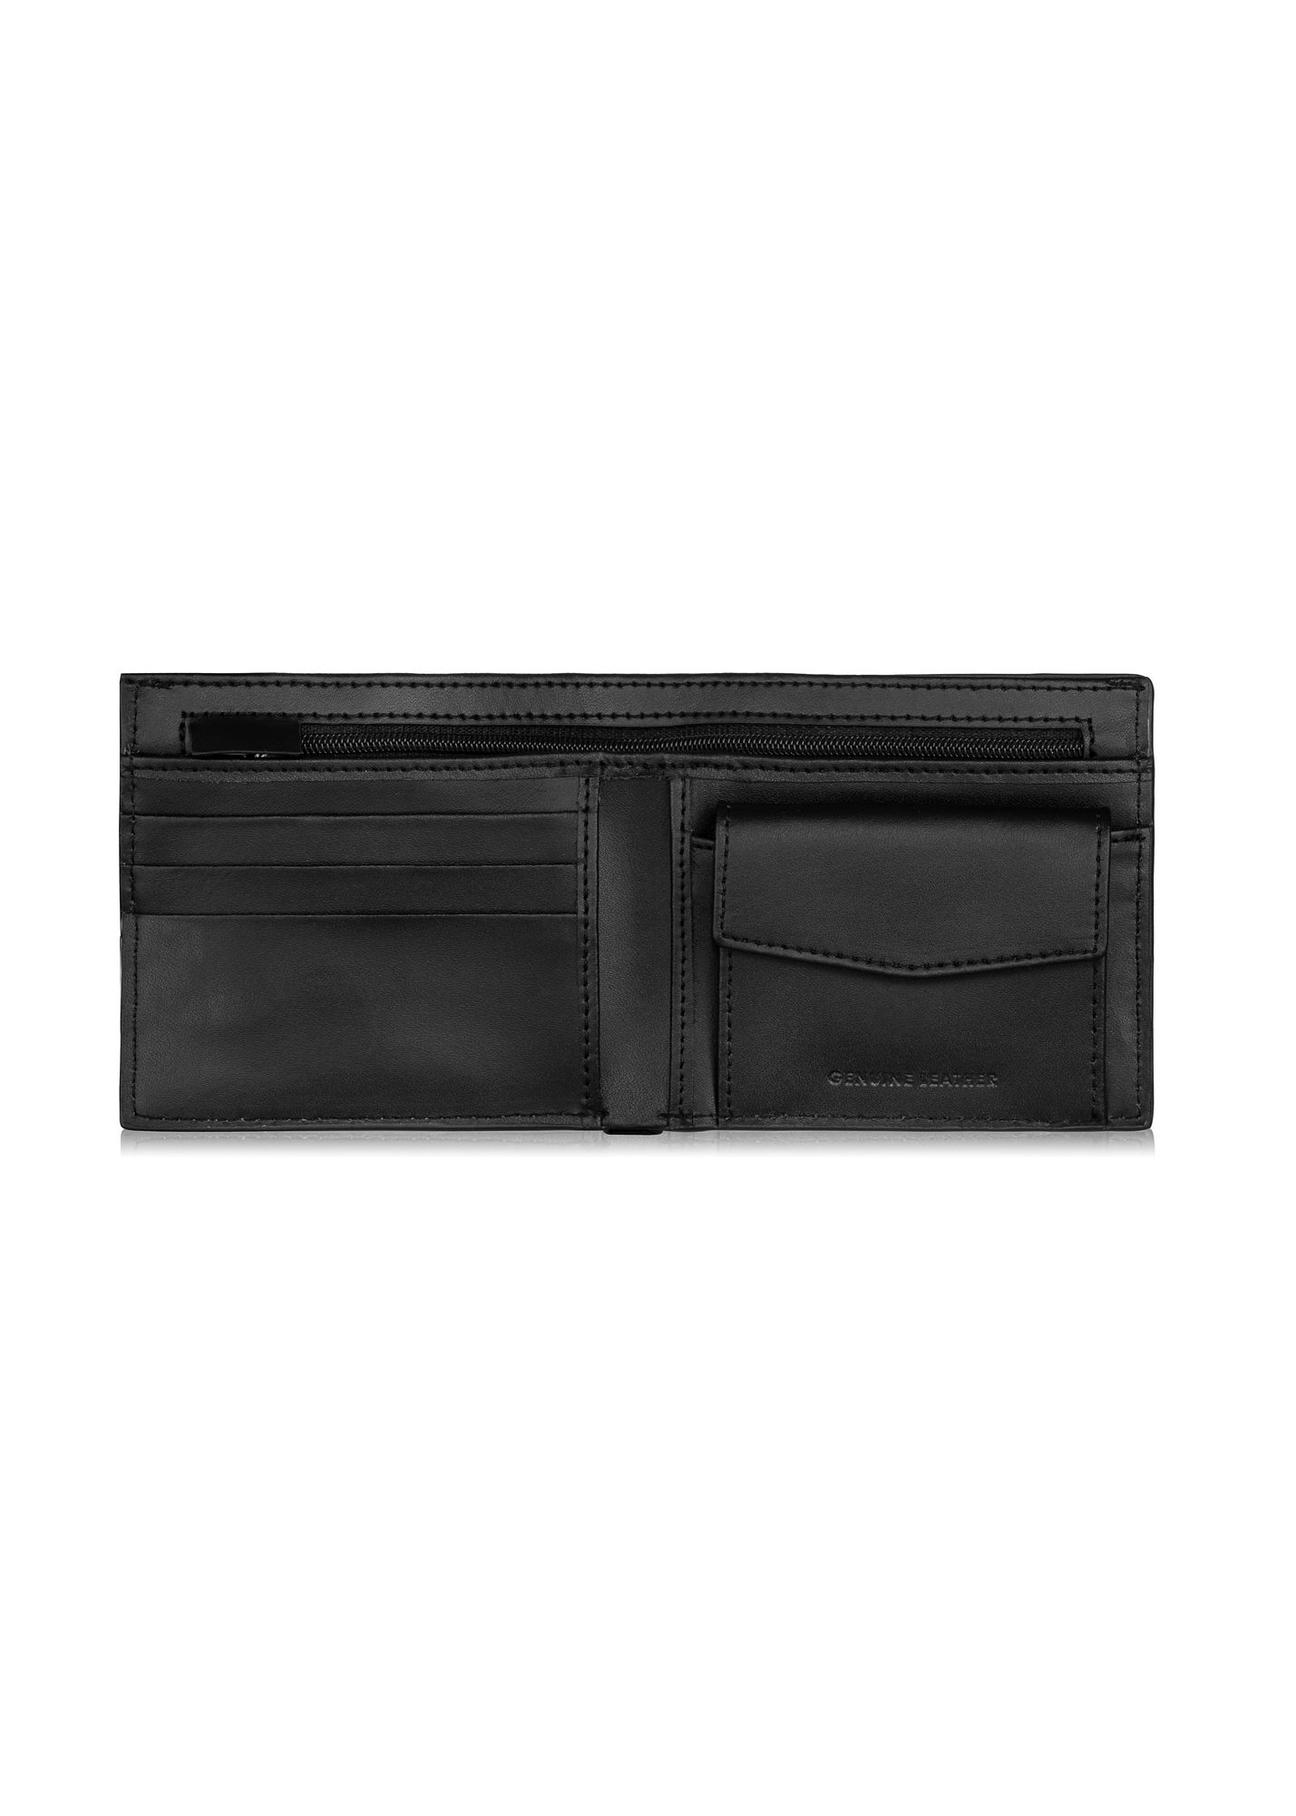 Skórzany czarny portfel męski z monogramem PORMS-0603-98(Z23)